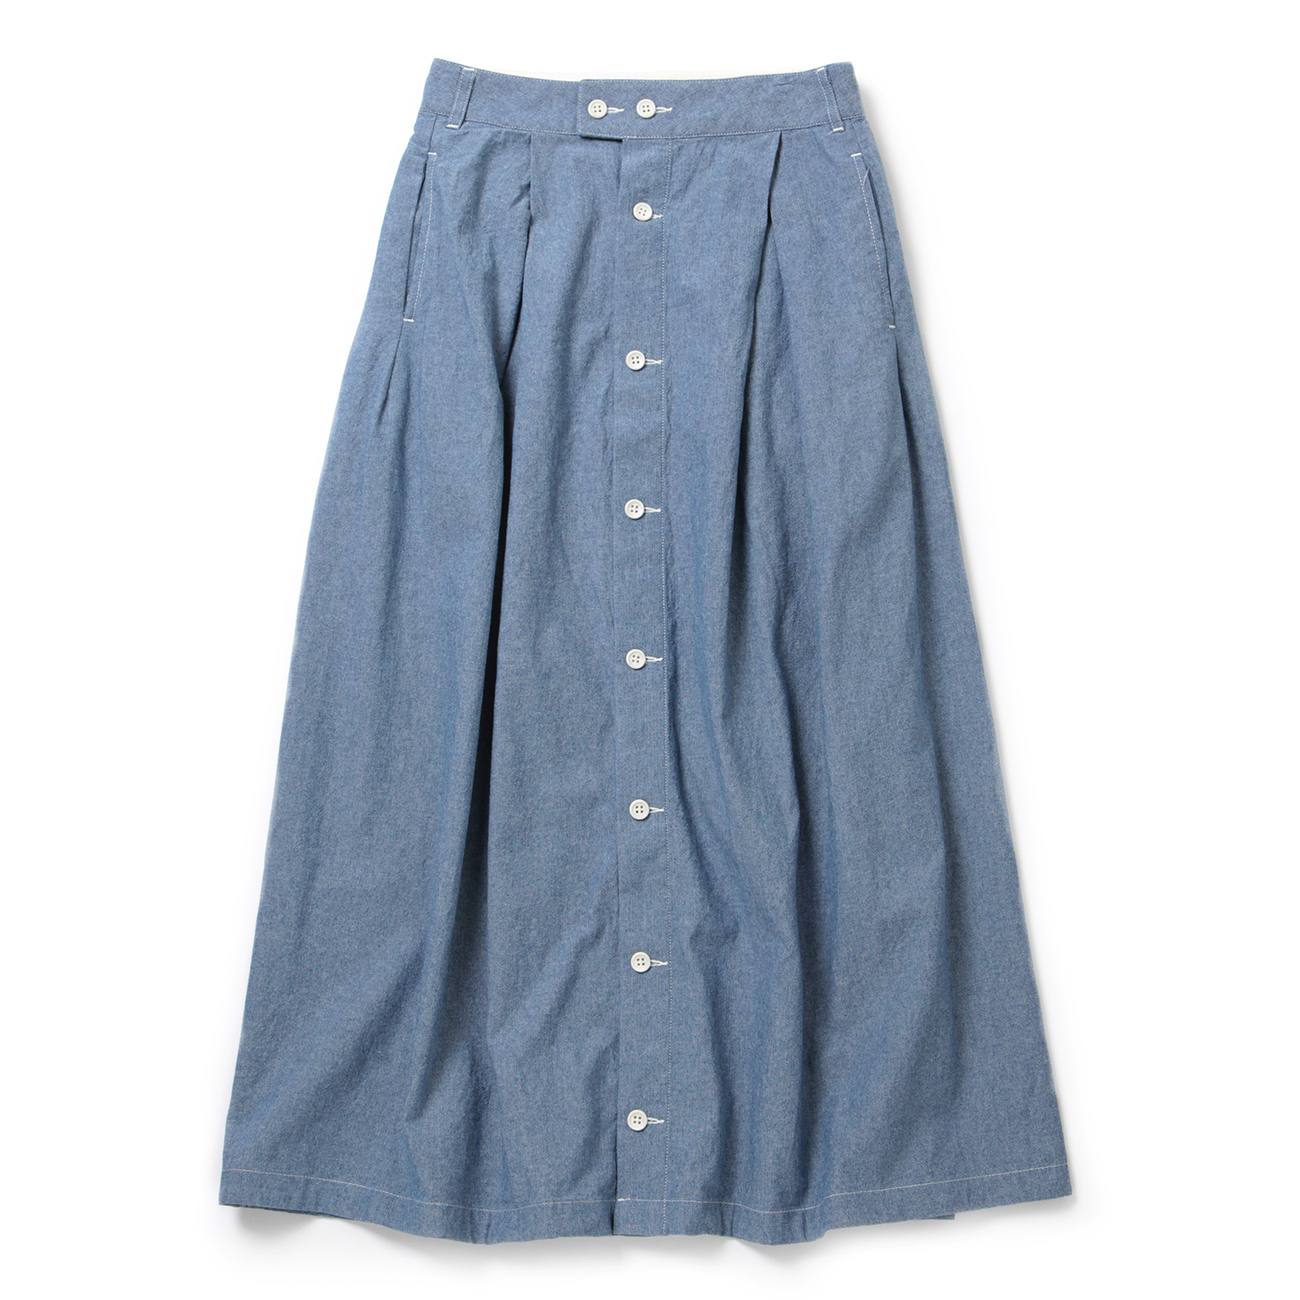 Tuck Skirt - 4.5oz Cotton Chambray (レディース) - Lt.Blue